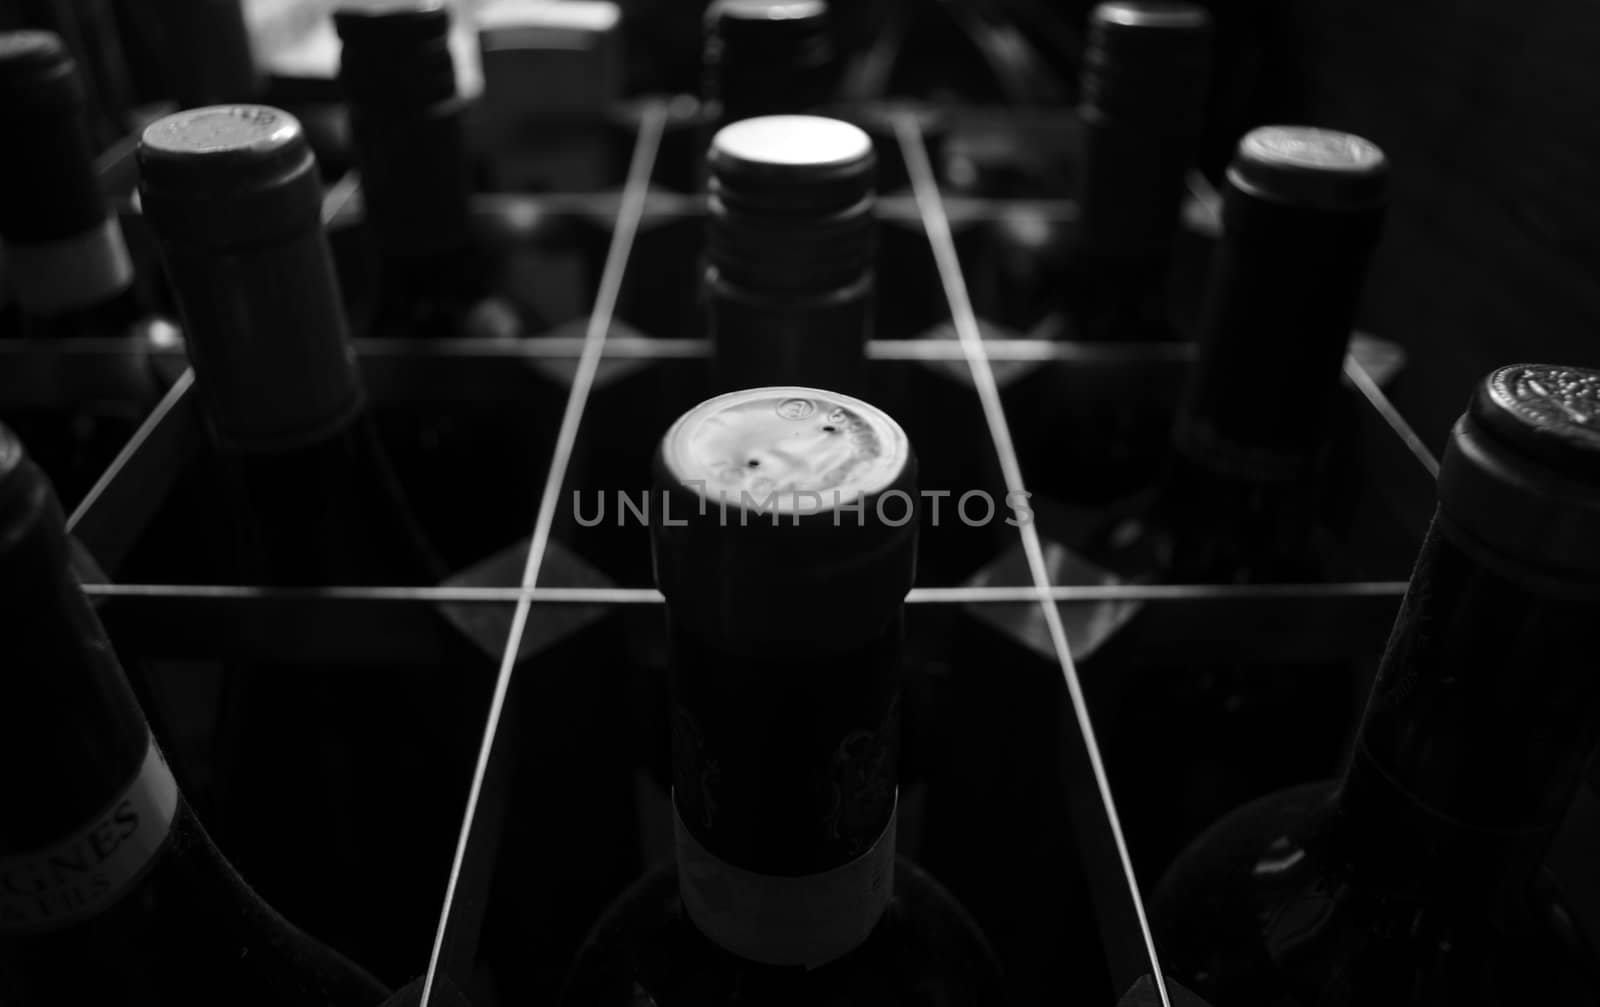 Monochrome, close upward view of wine rack